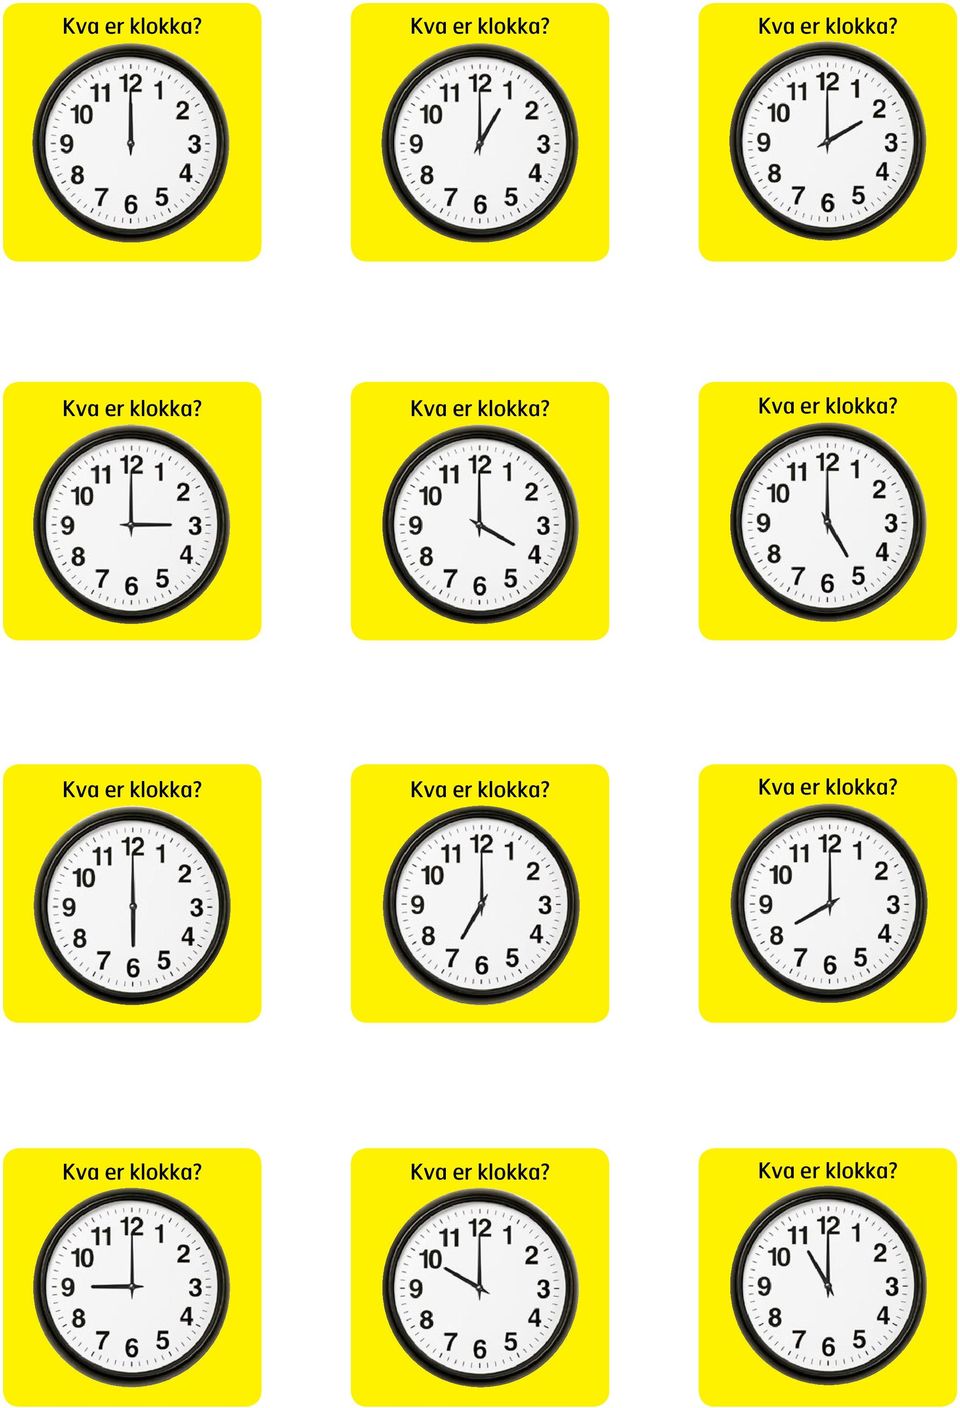 Kva er klokka? Kva er klokka? Kva er klokka? - PDF Free Download